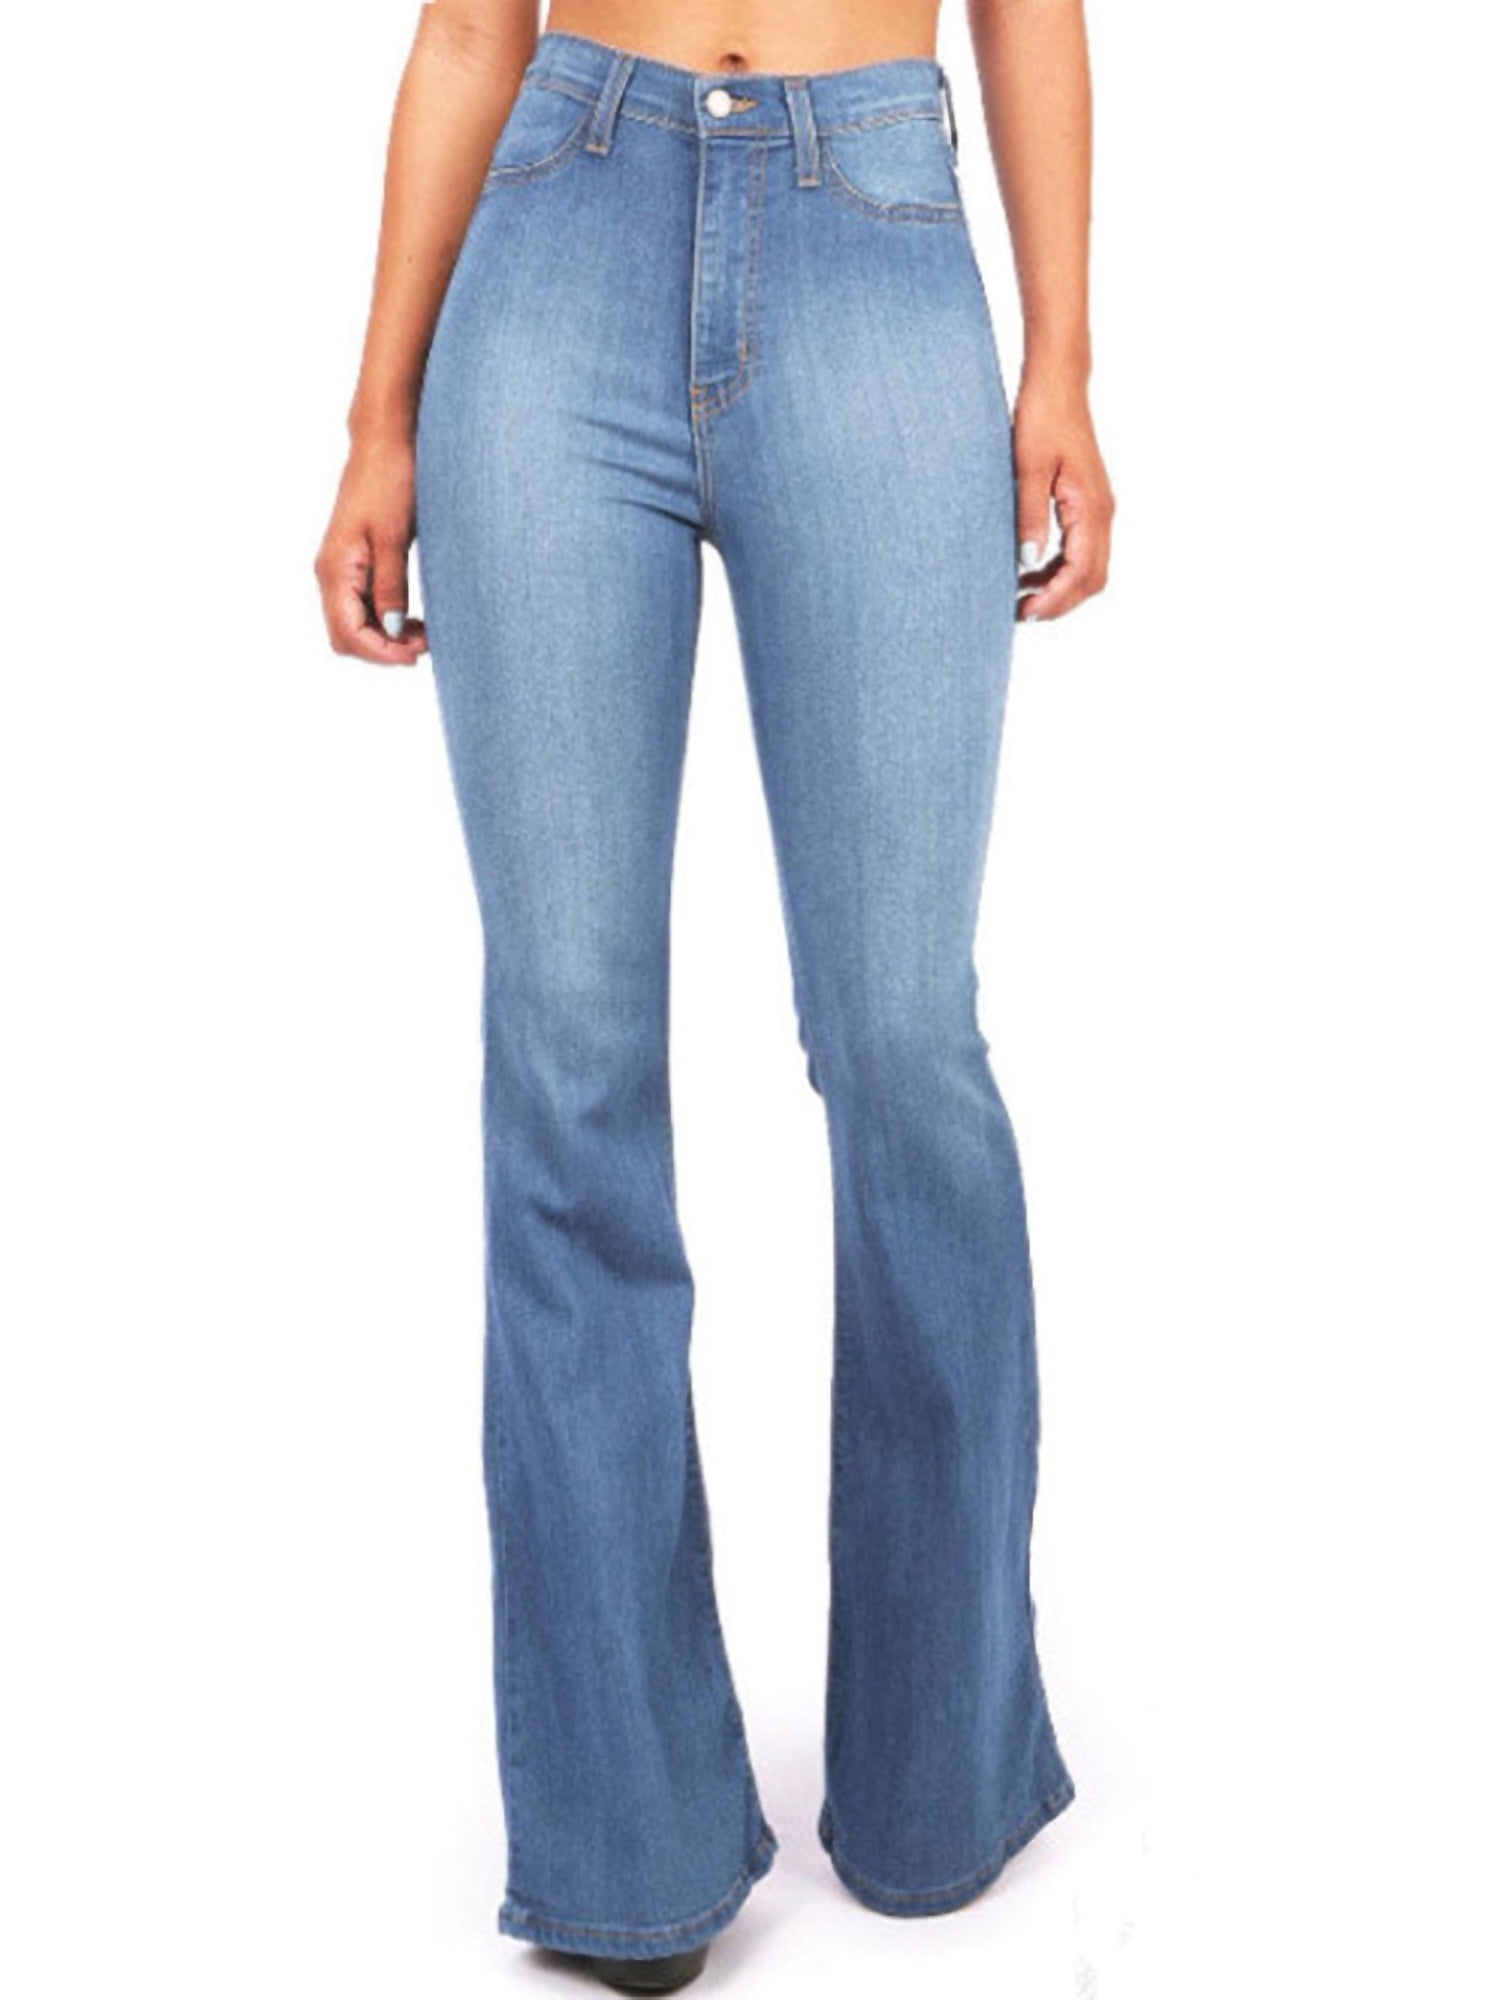 Femmes taille haute Flare Bell Bottom Denim Pantalon stretch bootcut jeans pantalon 